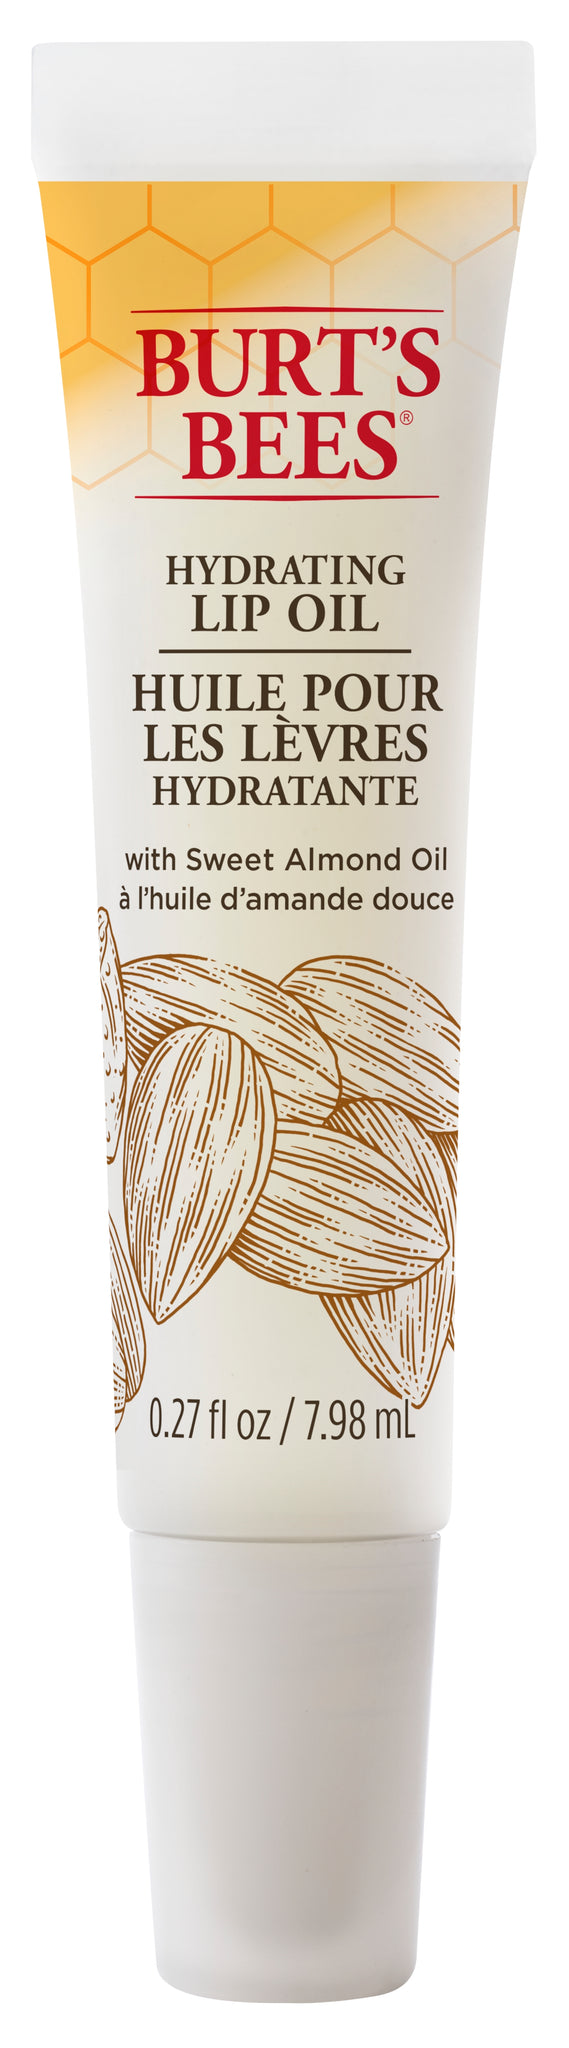 Burt's Bees Hydrating Lip Oil 7.98ml / Sweet Almond